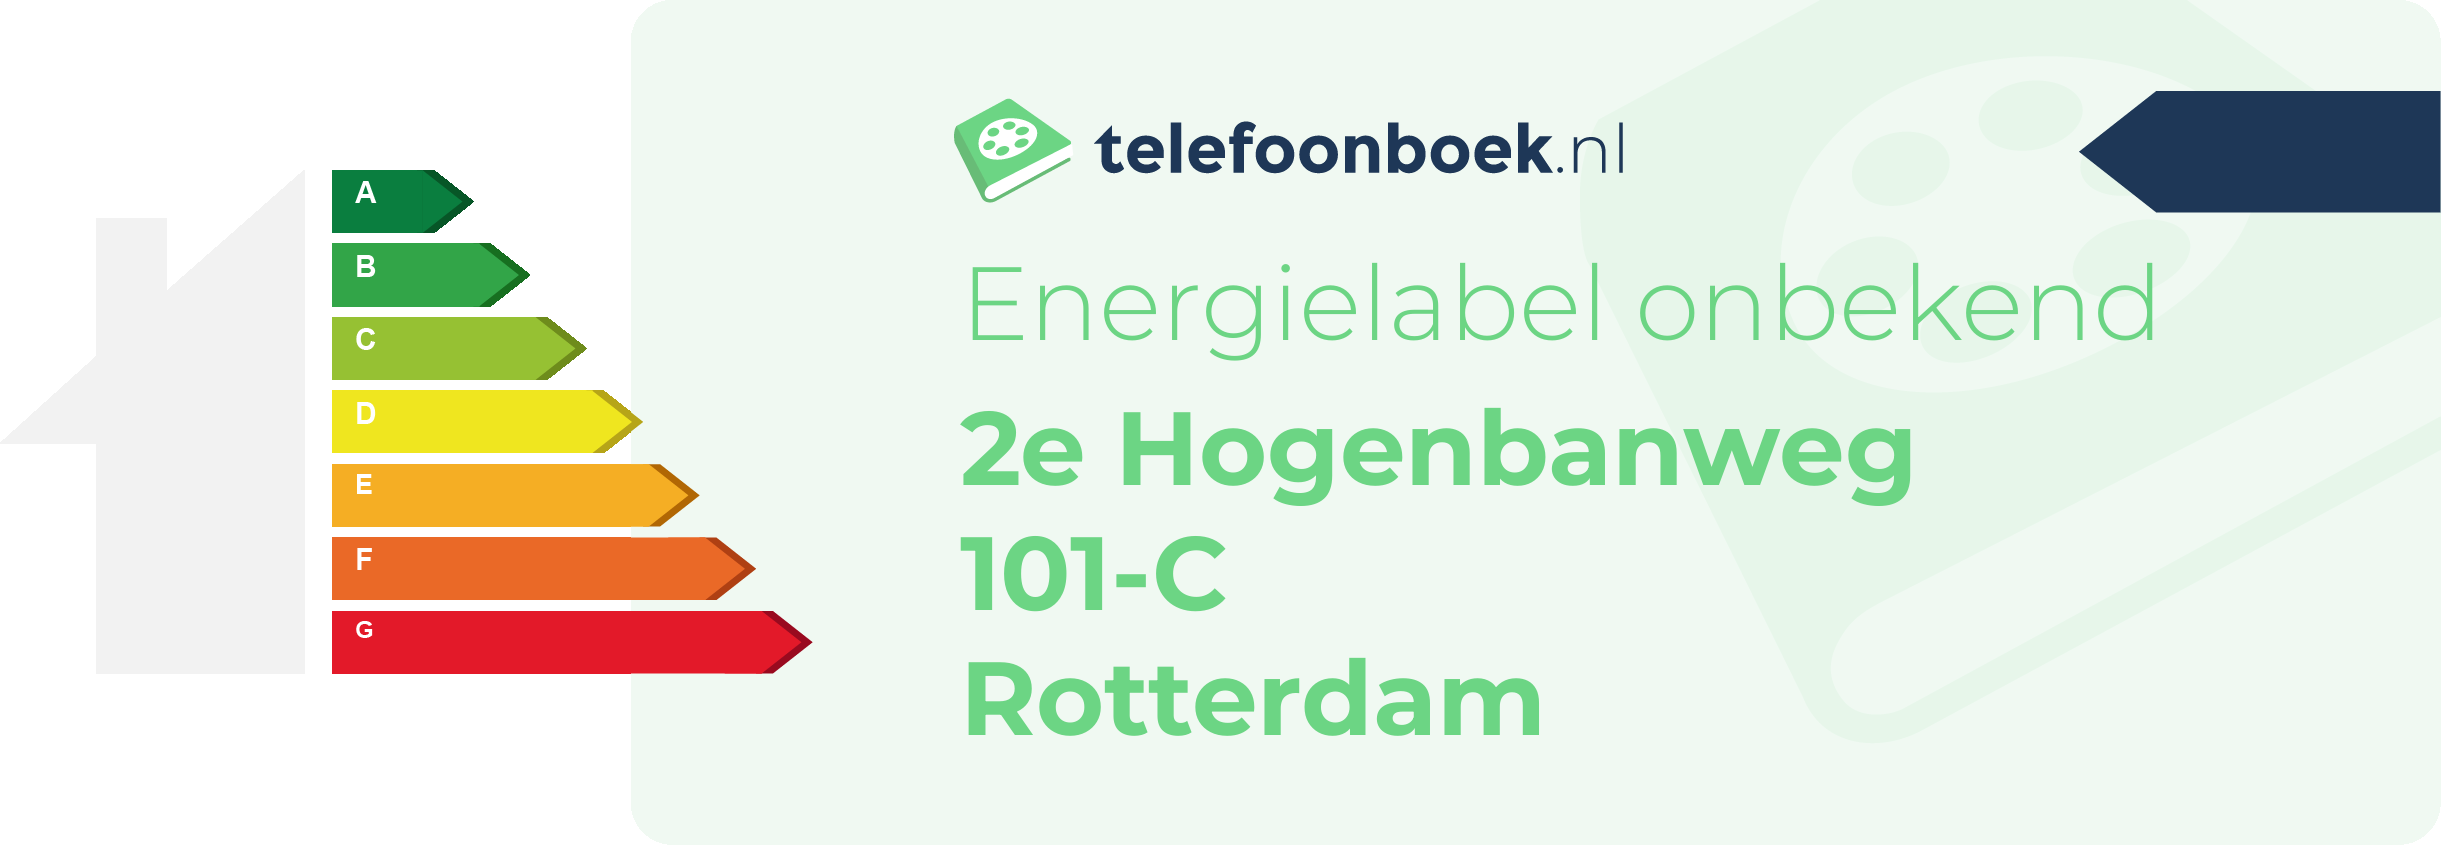 Energielabel 2e Hogenbanweg 101-C Rotterdam